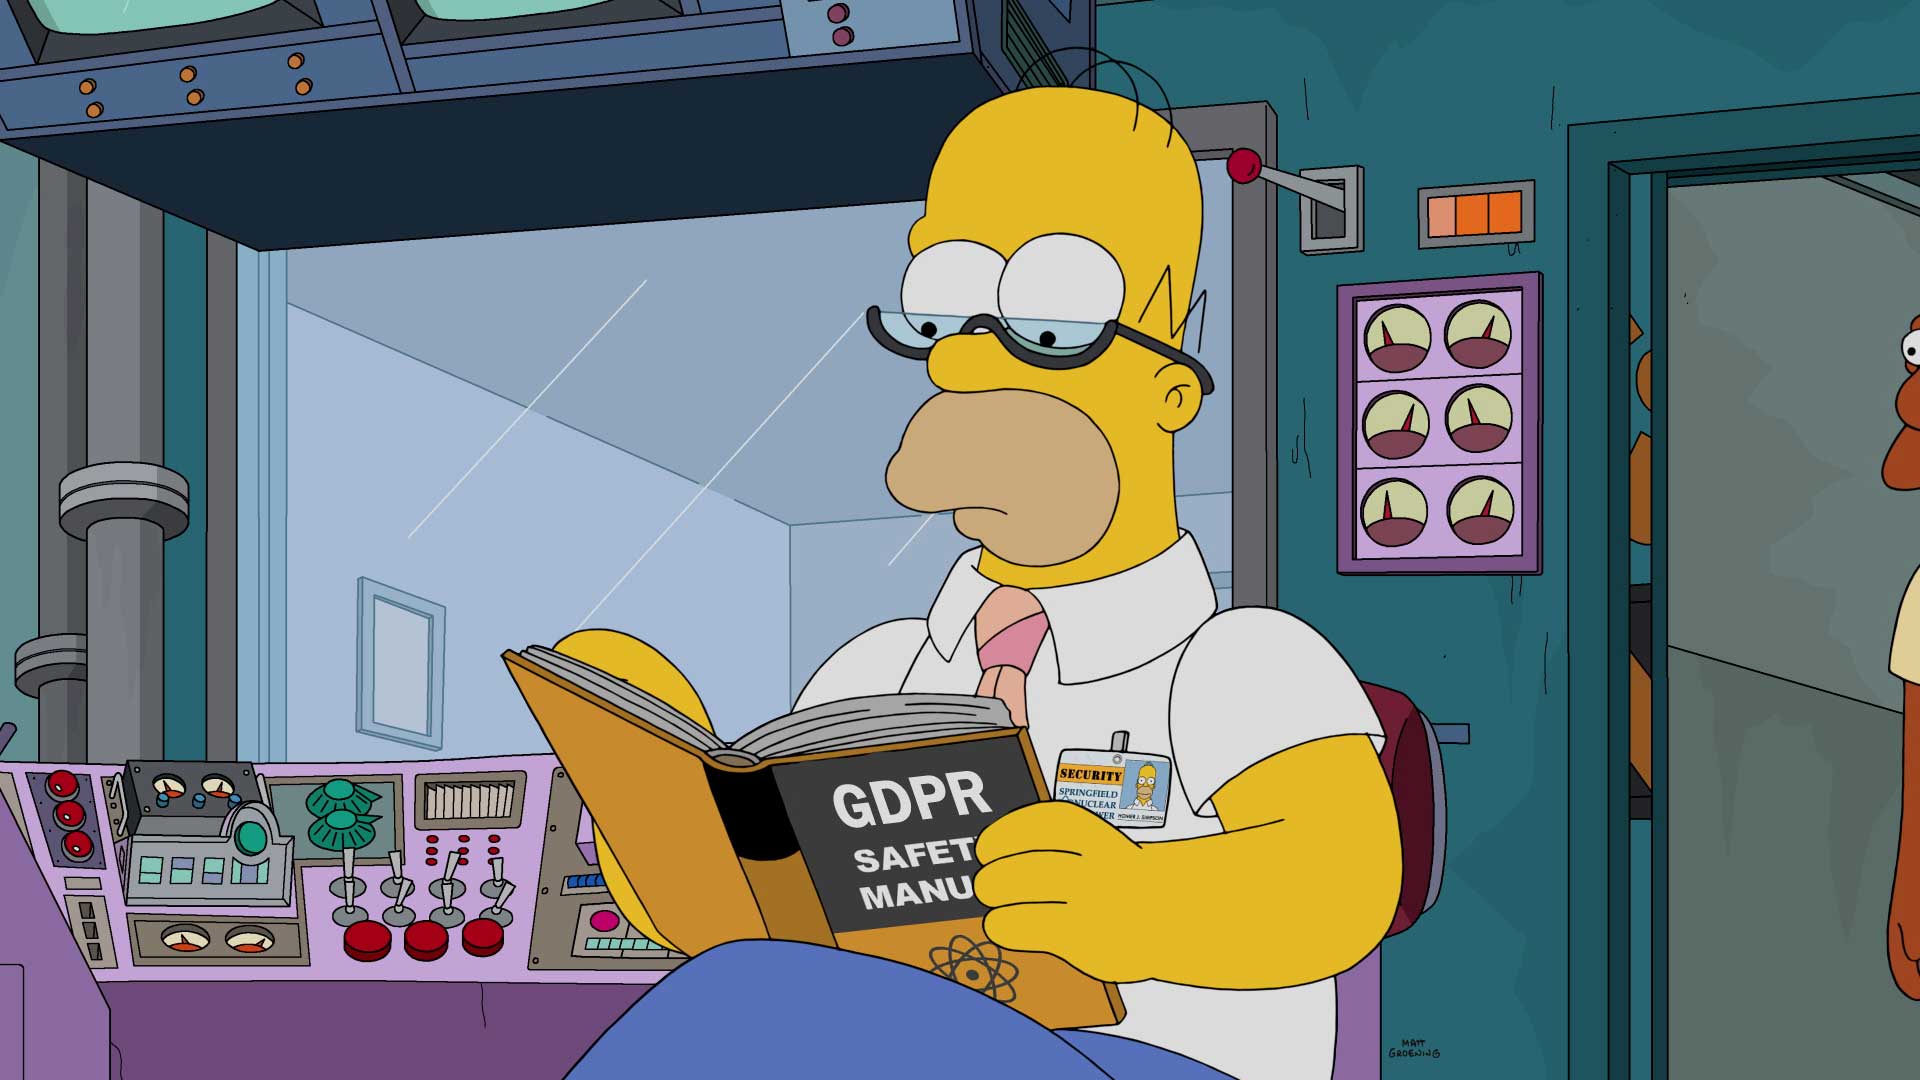 Homer brushing up on GDPR